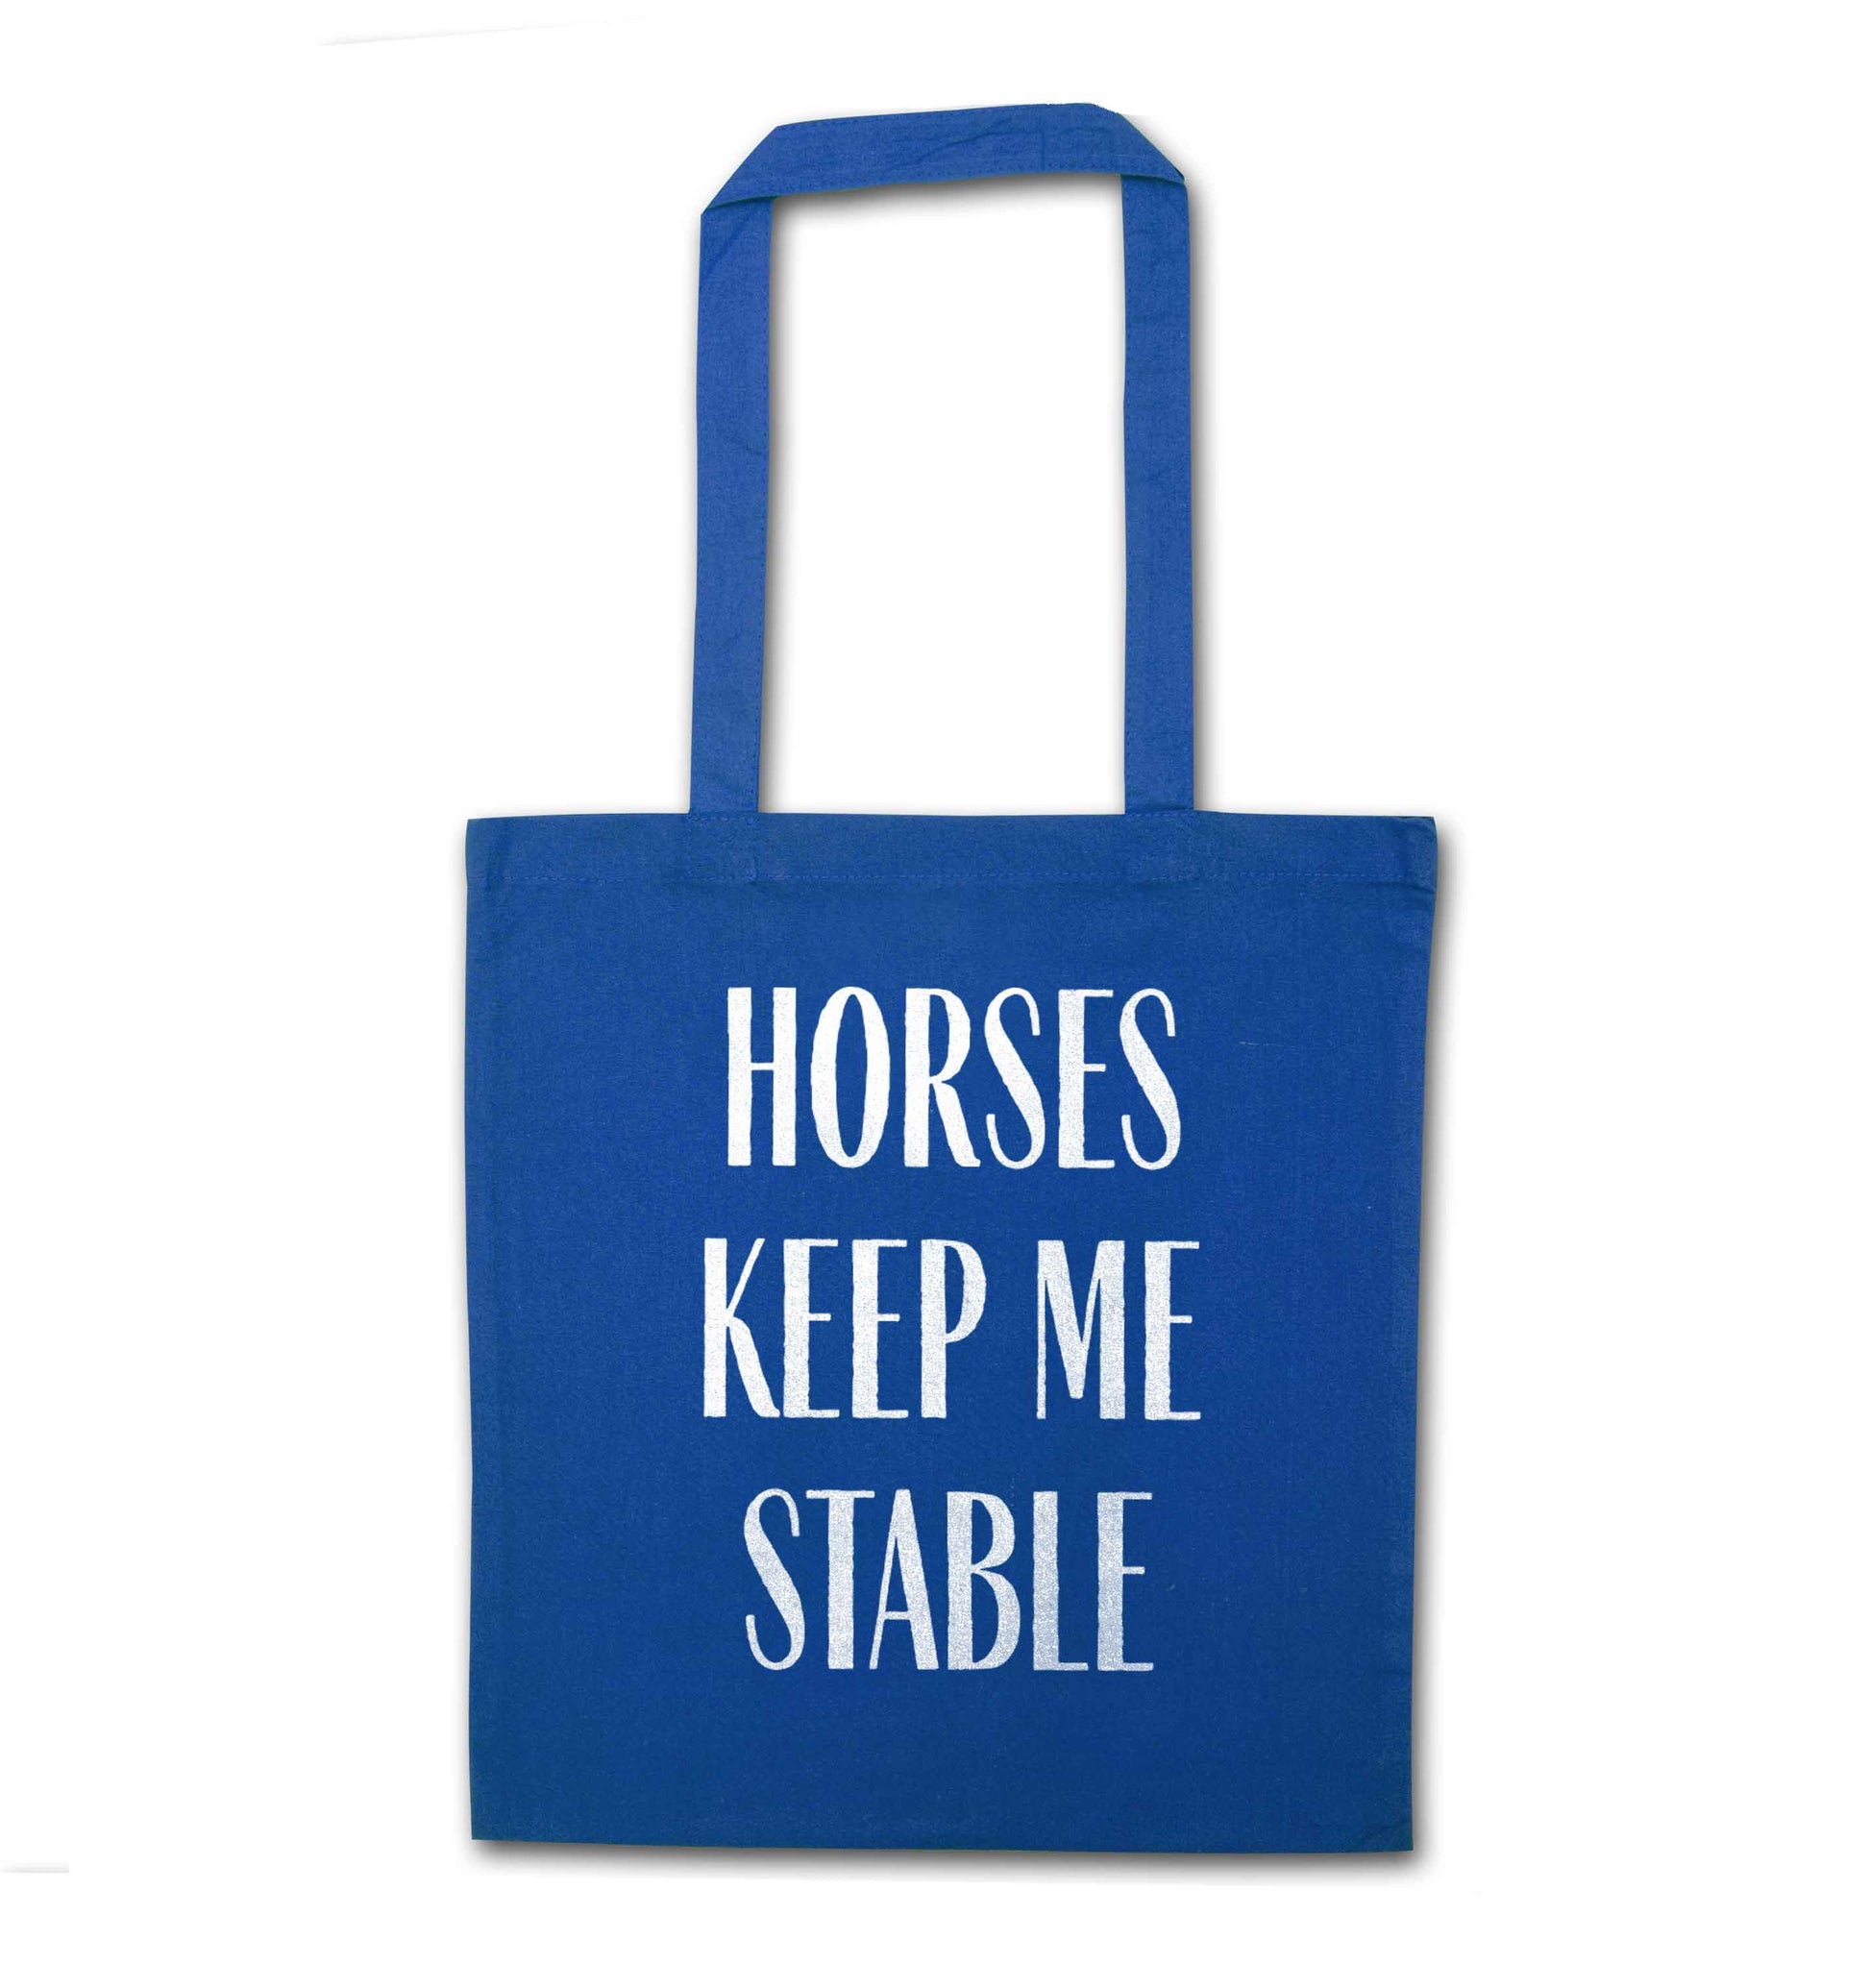 Horses keep me stable blue tote bag